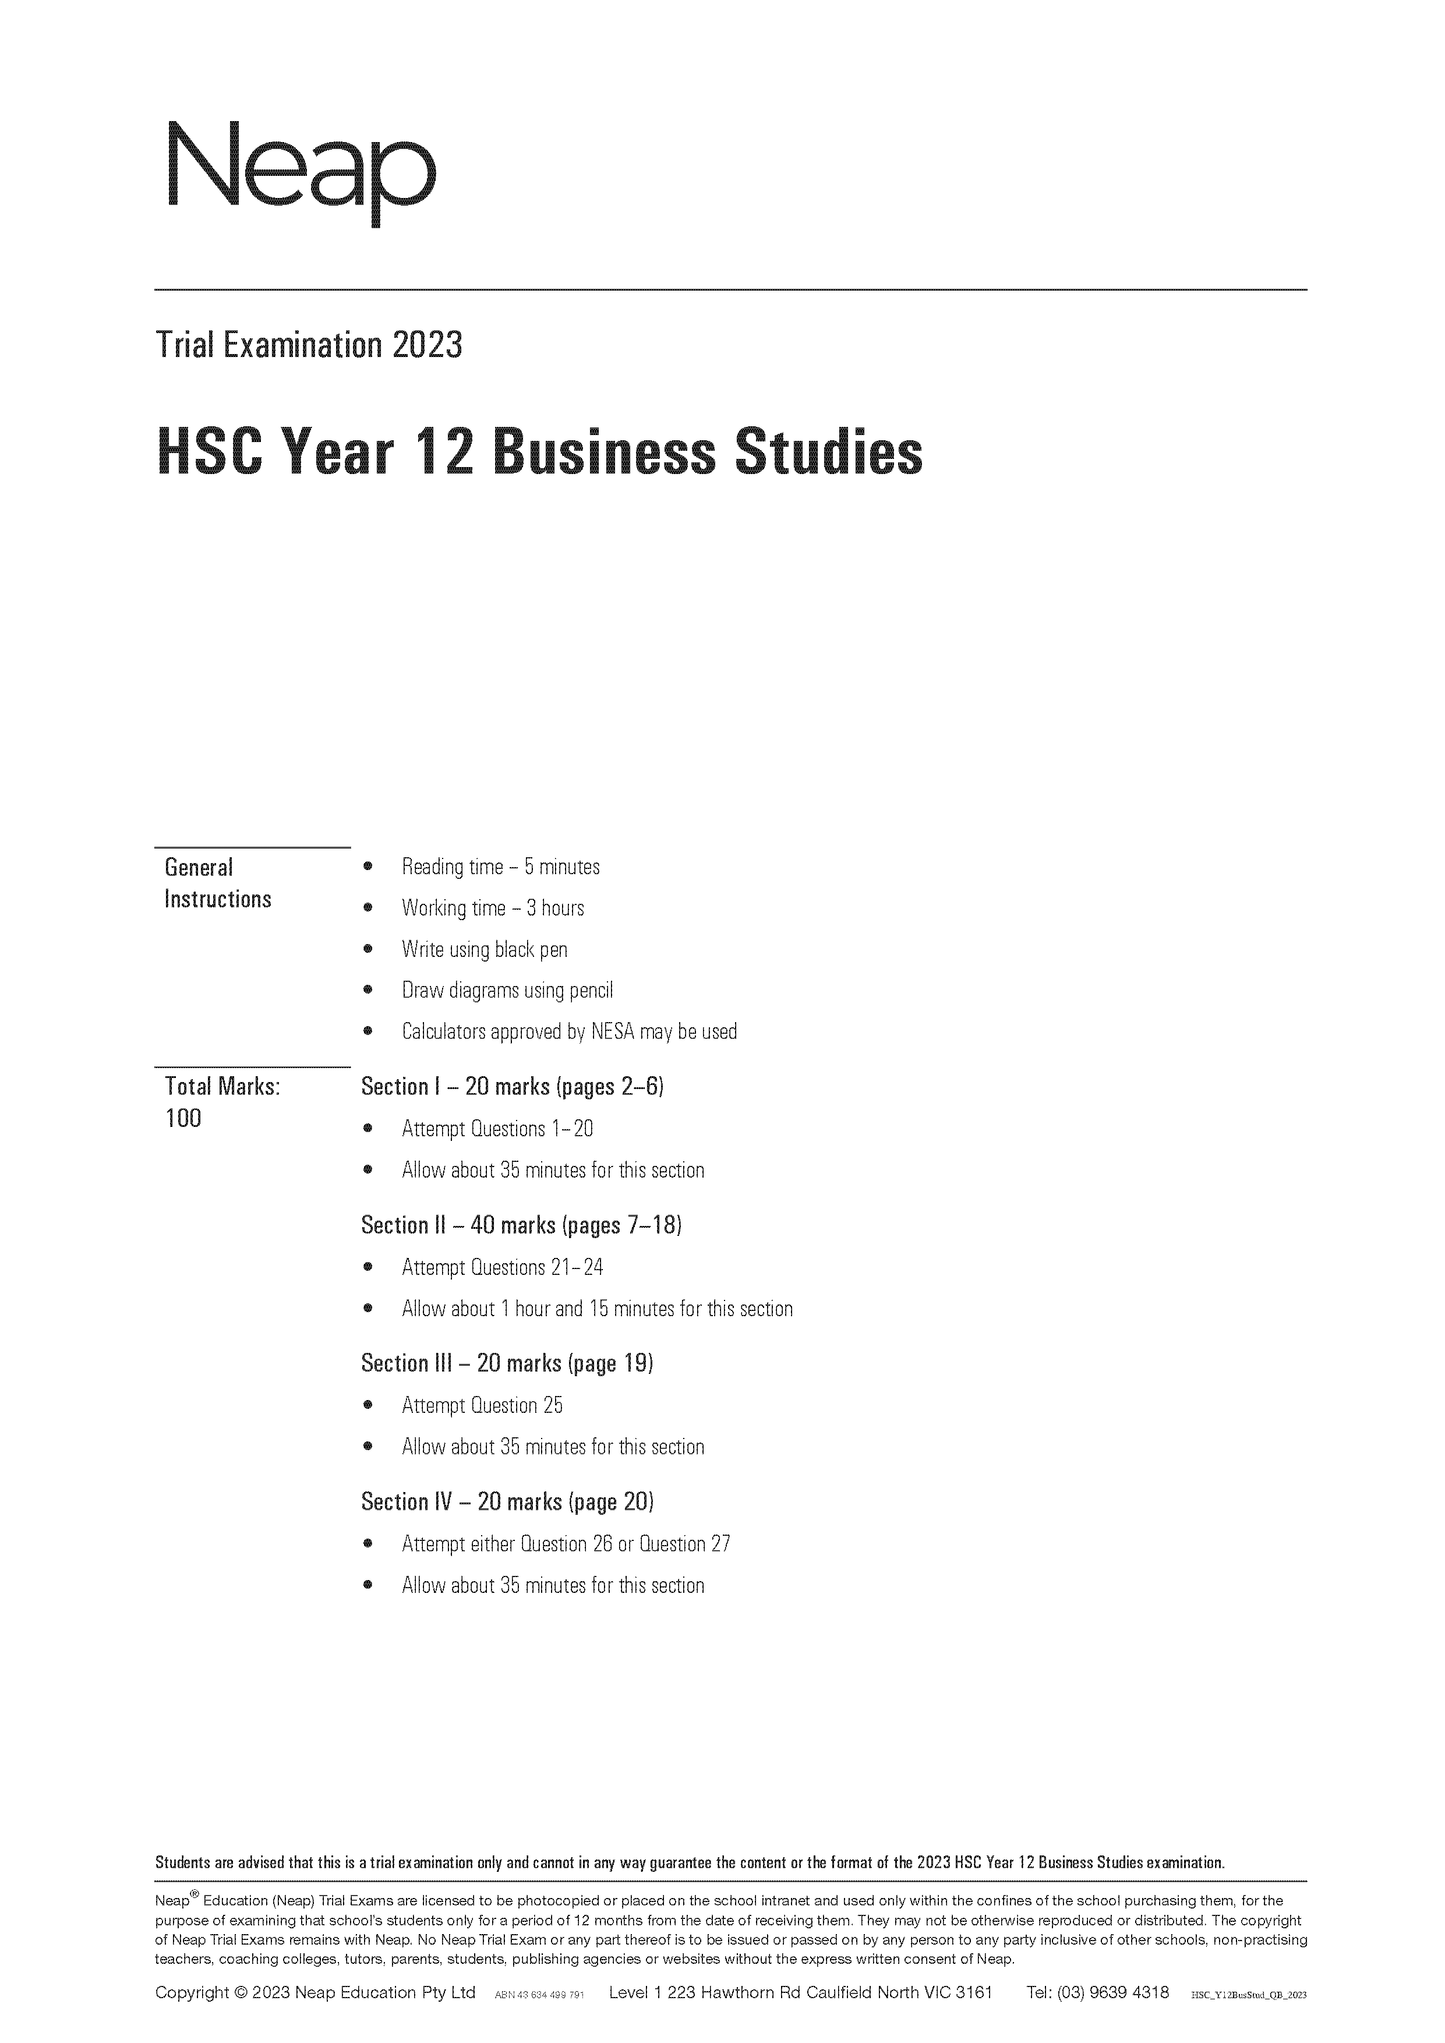 Neap Trial Exam: 2023 HSC Year 12 Business Studies